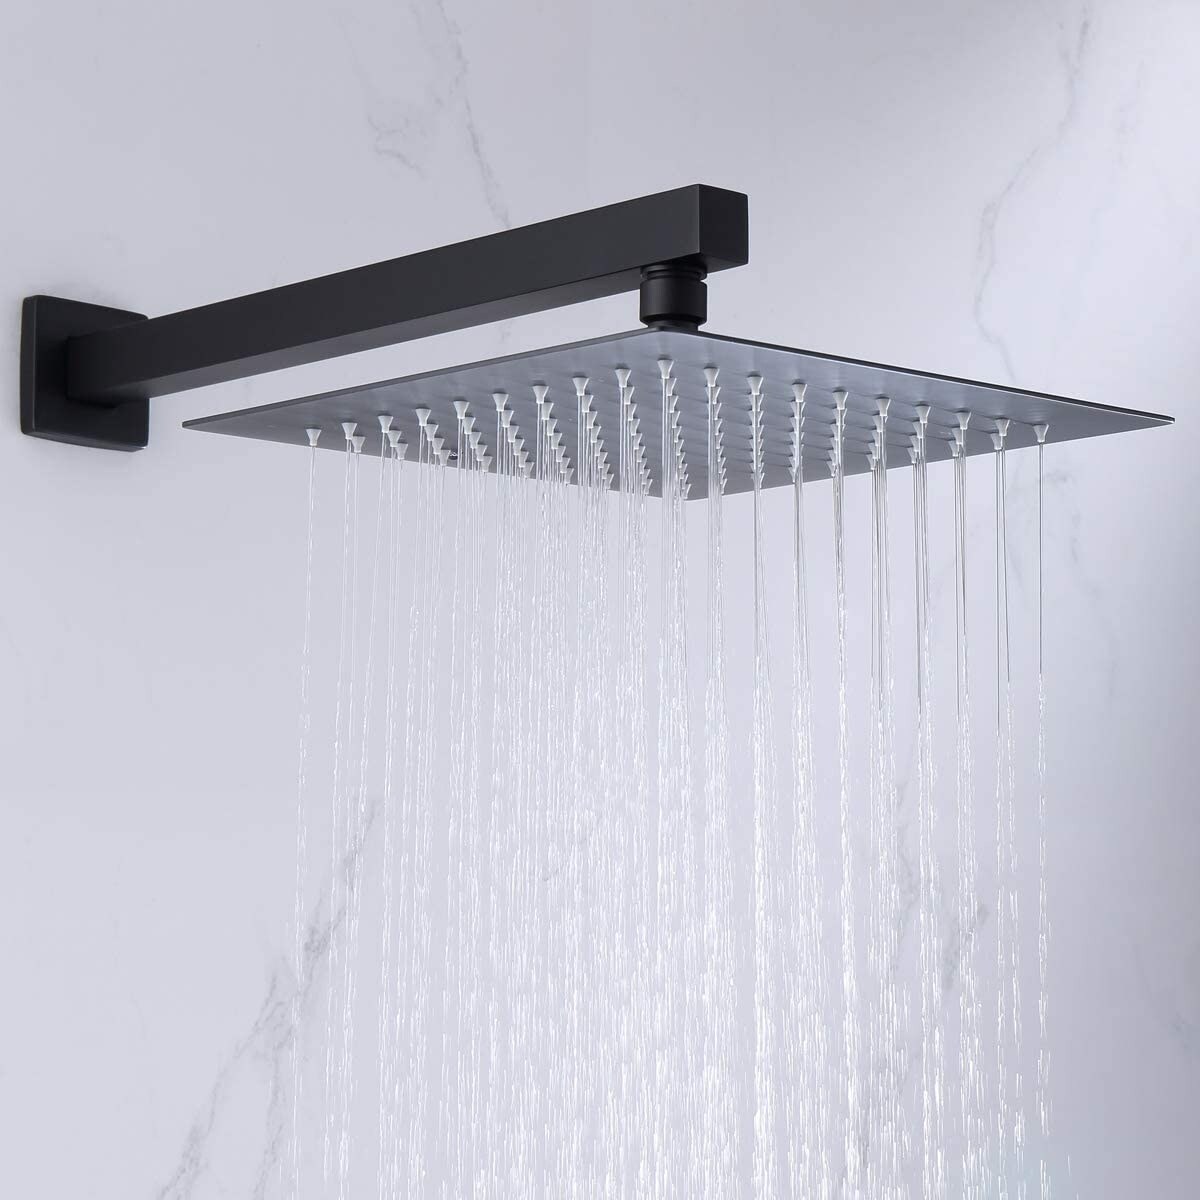 https://ak1.ostkcdn.com/images/products/is/images/direct/4c453c30ee7c256b5f7b476d3611d66005e7e711/Square-Dual-Handle-2-Function-Concealed-Bathroom-Shower-Set.jpg